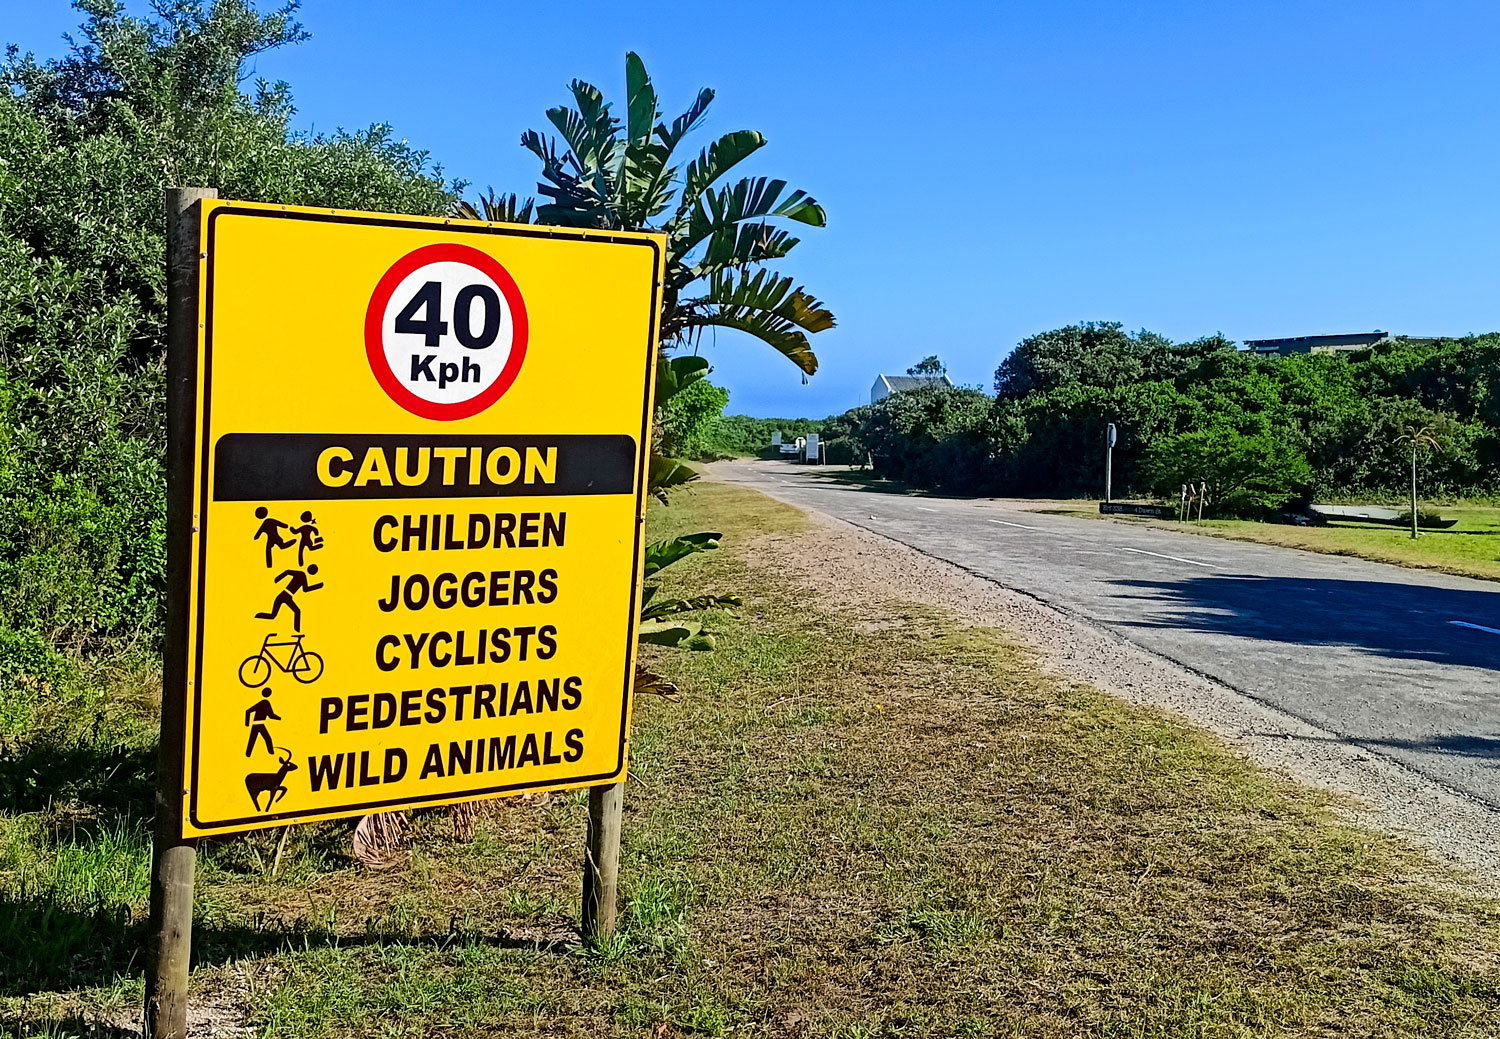 Road sign 40kph Caution Children Joggers Cyclists Pedestrians Wild Animals